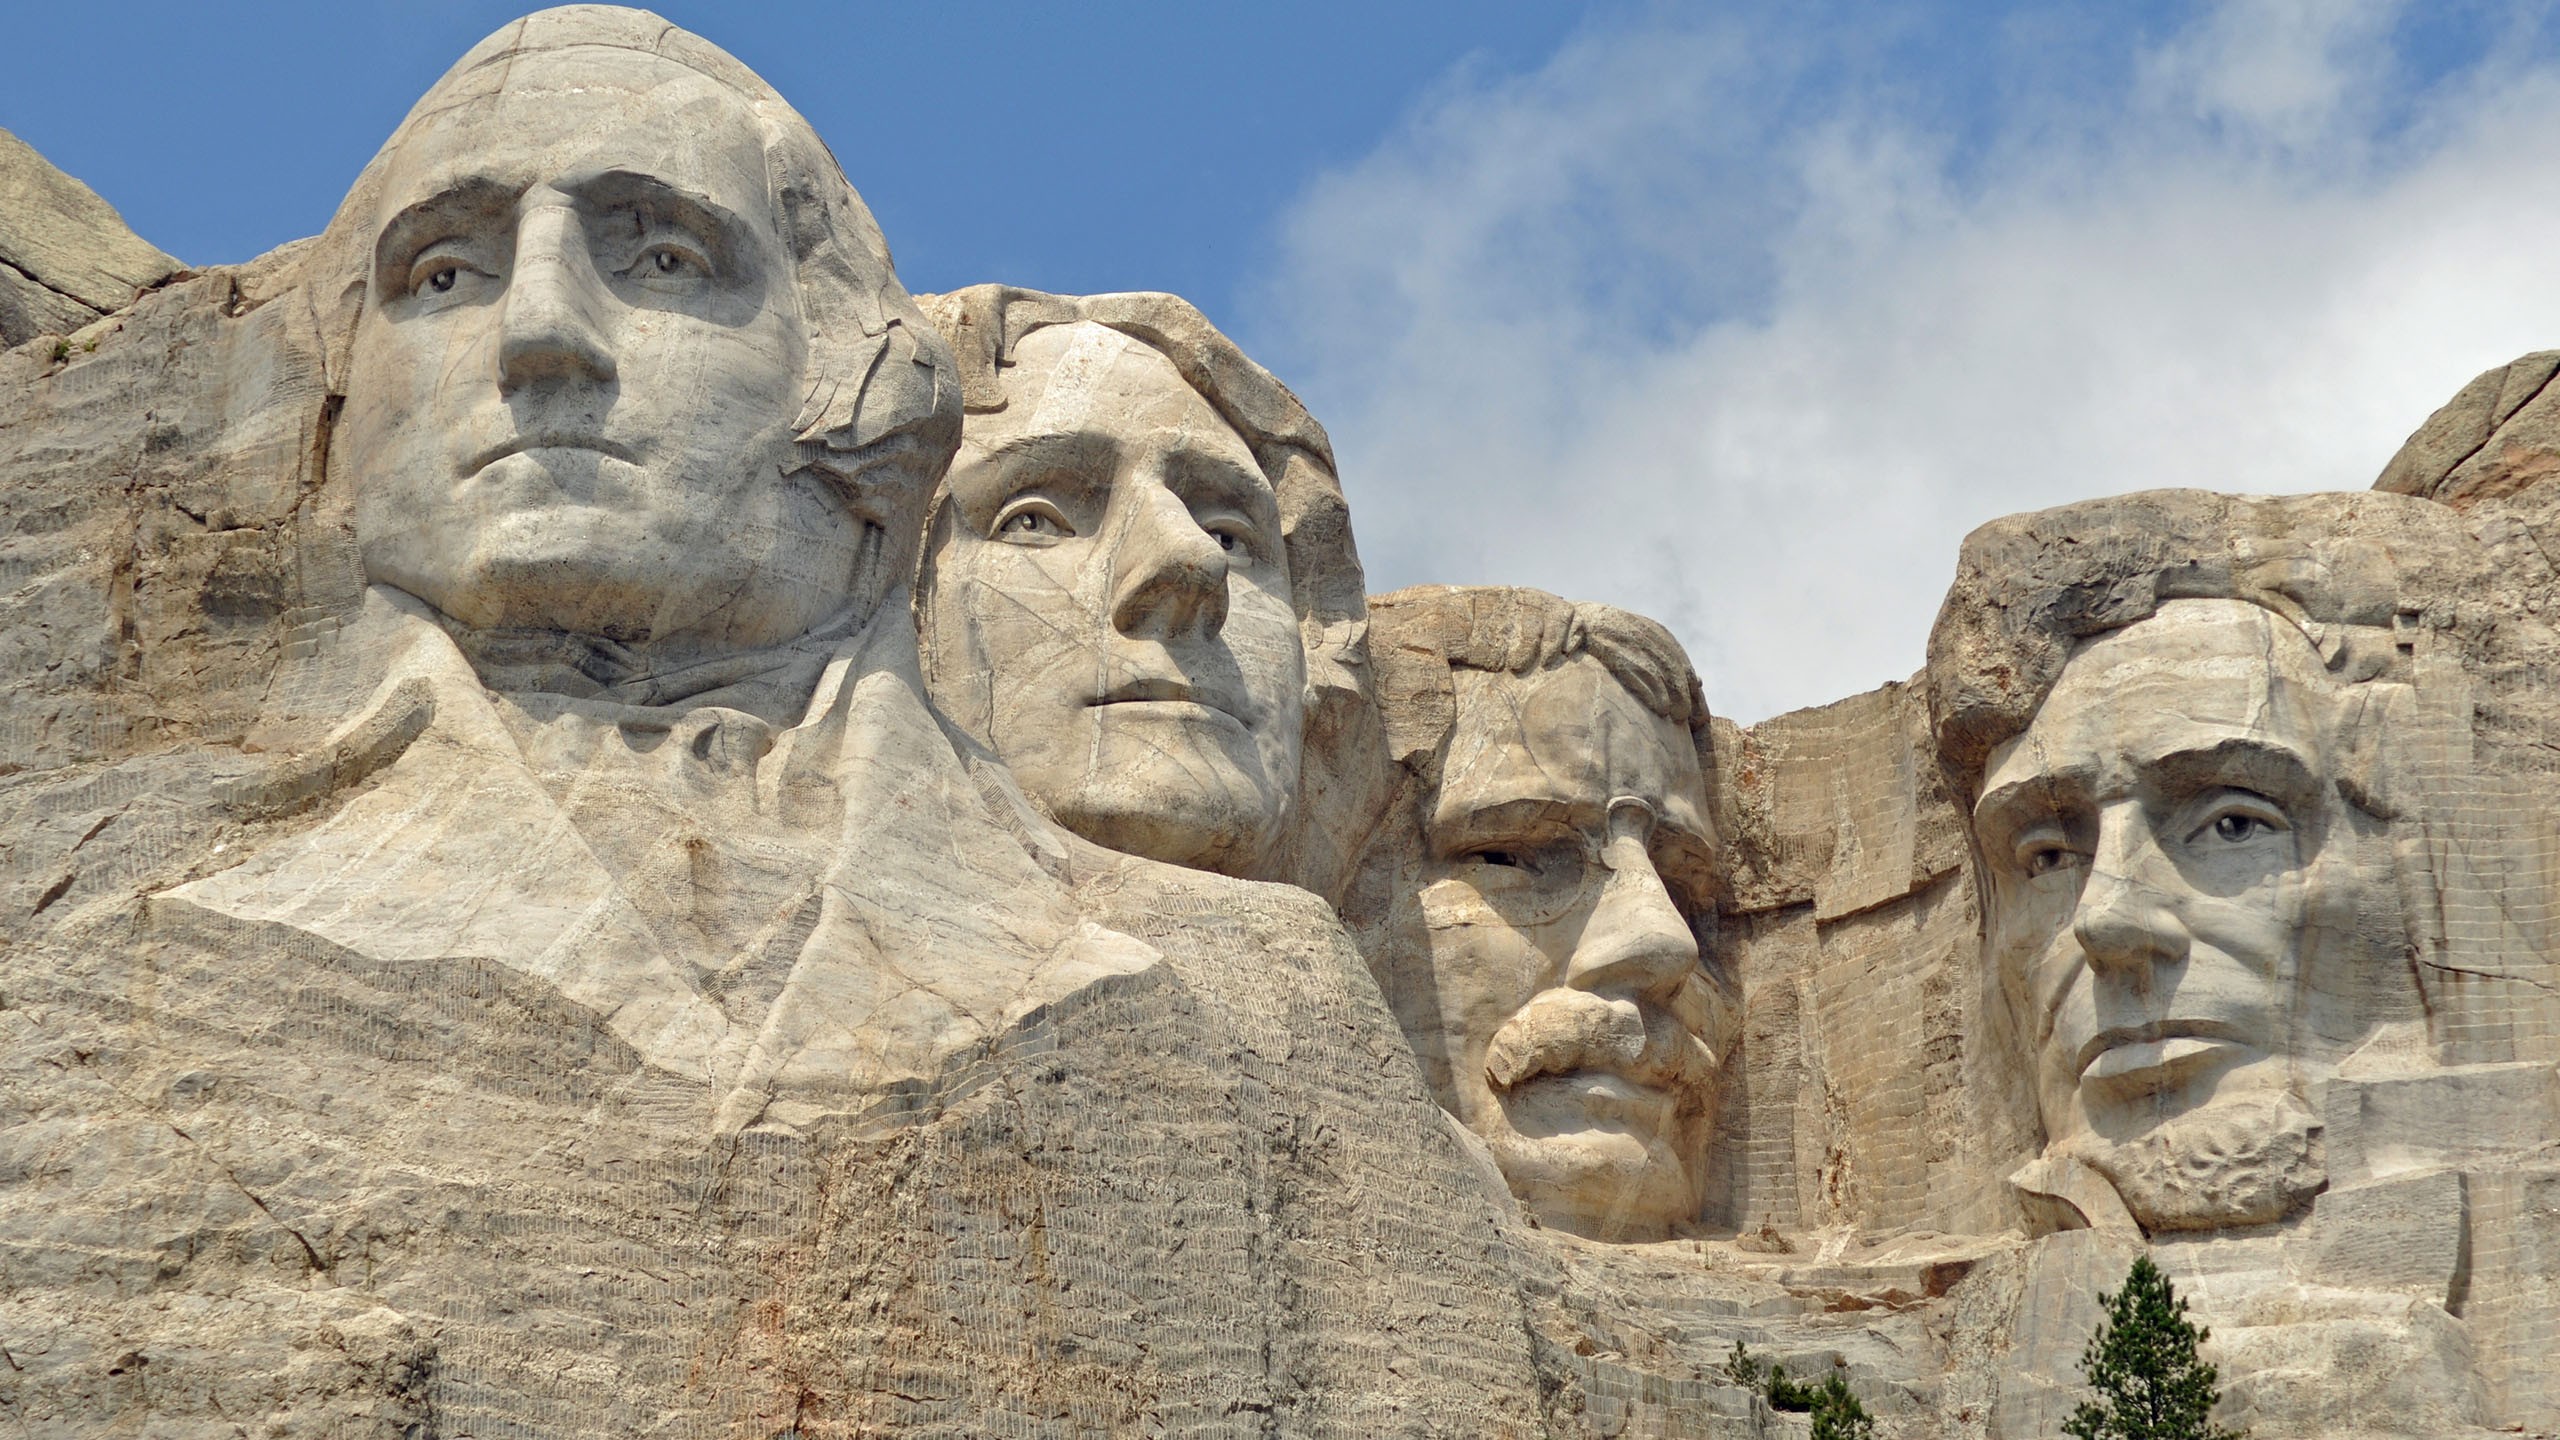 General 2560x1440 landscape Mount Rushmore Thomas Jefferson George Washington Theodore Roosevelt Abraham Lincoln presidents Teddy Roosevelt landmark political figure